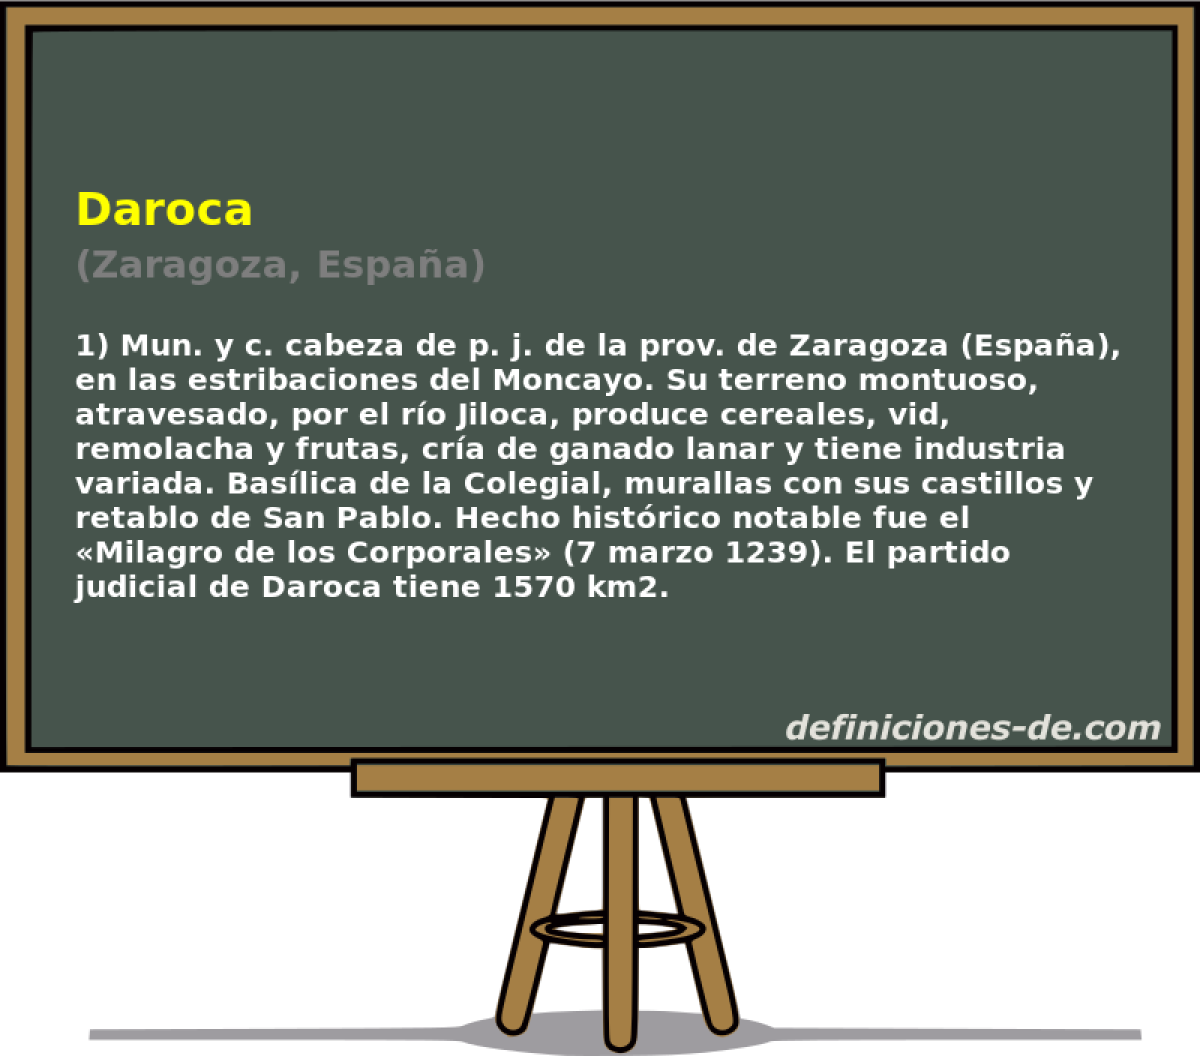 Daroca (Zaragoza, Espaa)